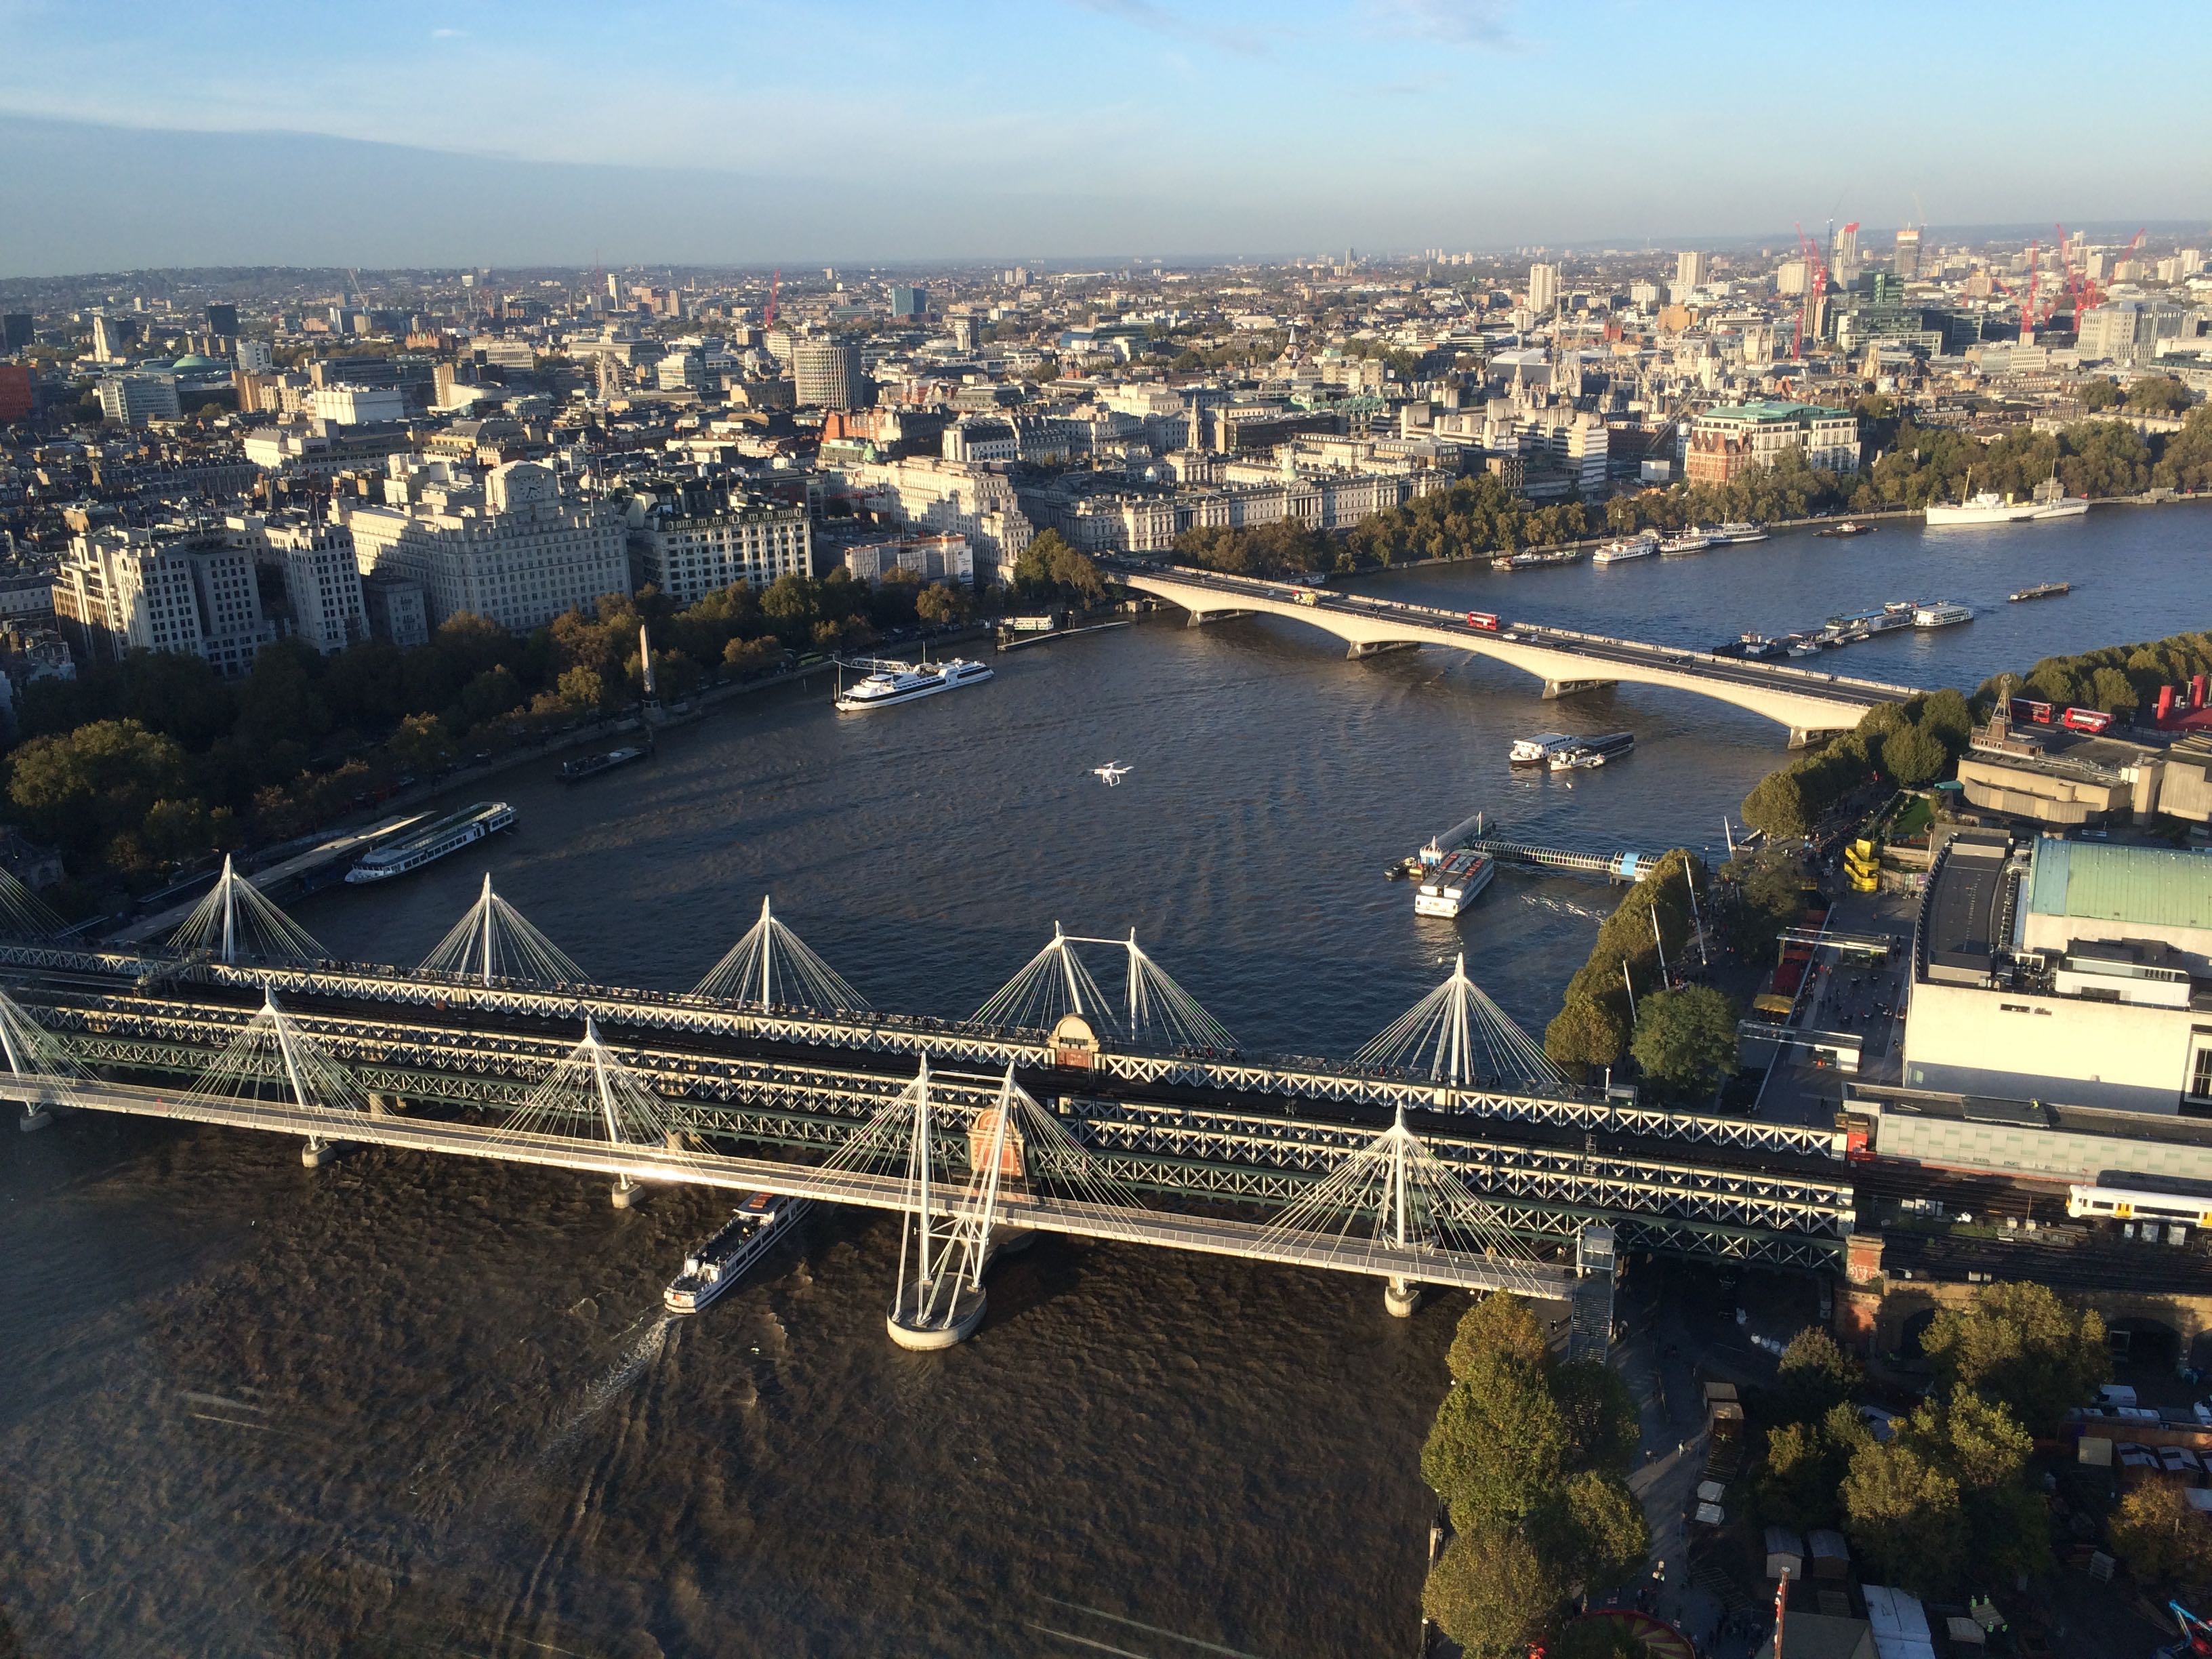 Drone buzzing the London Eye